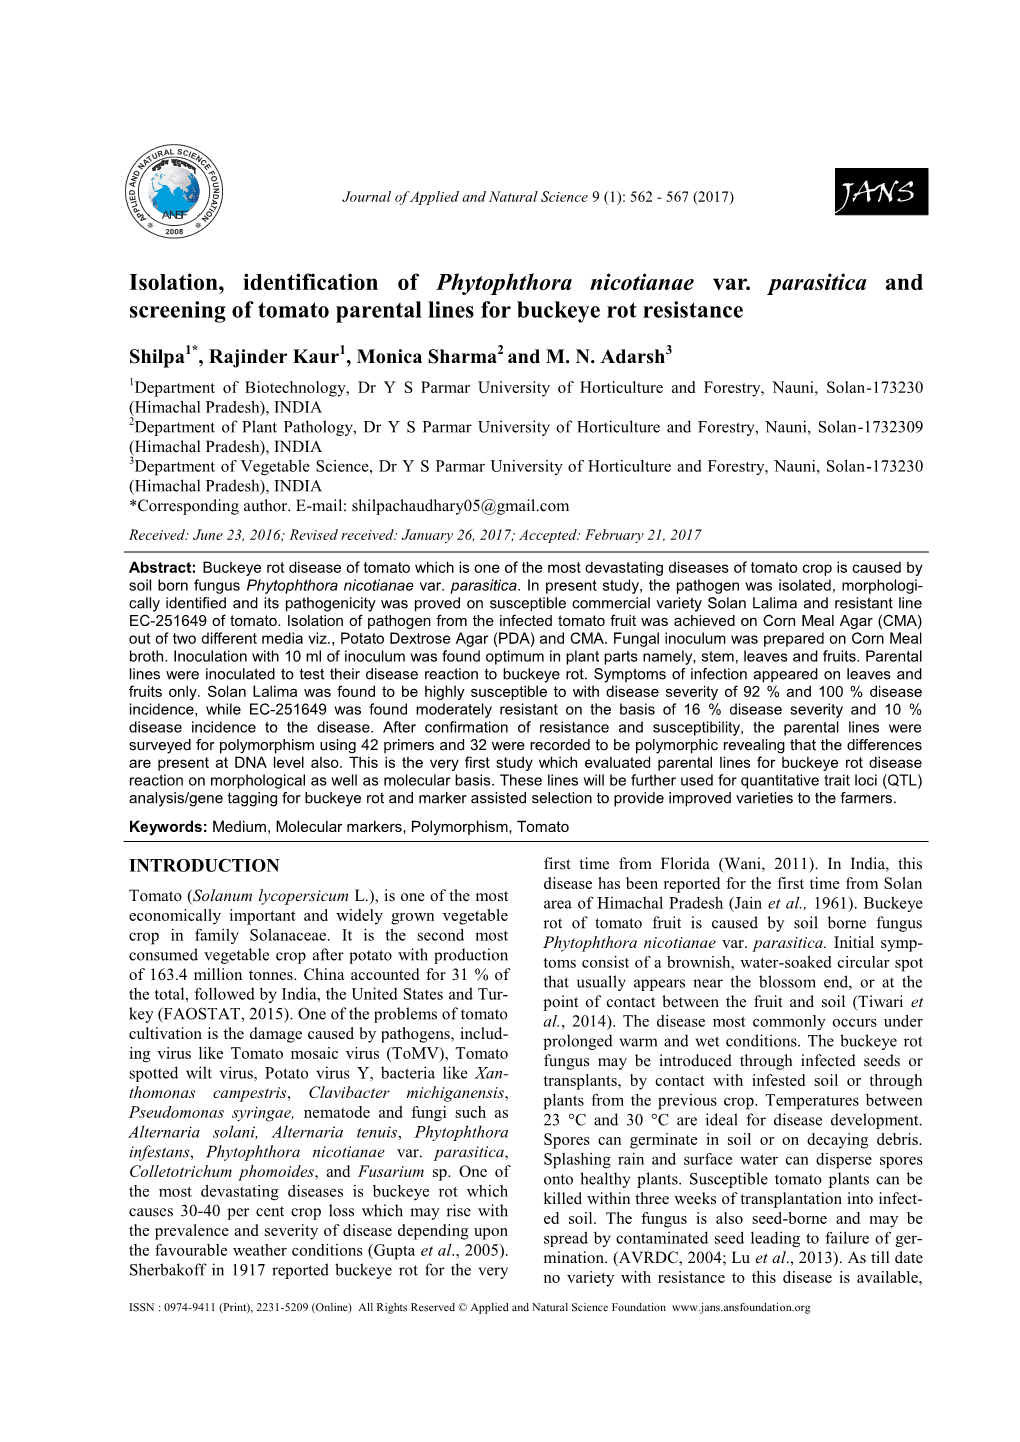 Isolation, Identification of Phytophthora Nicotianae Var